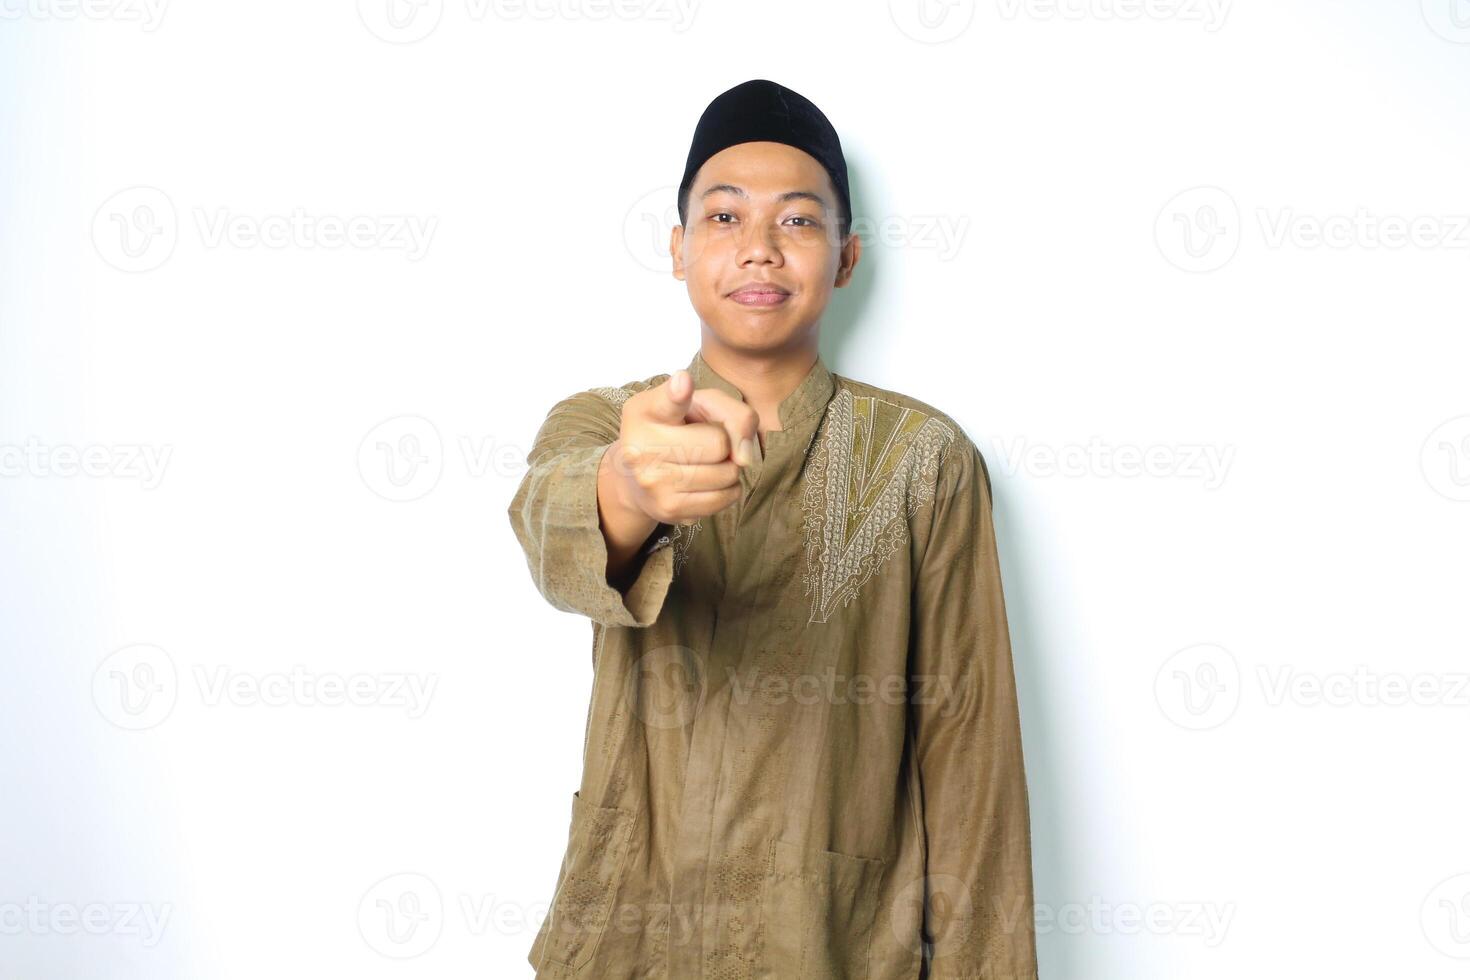 calma asiático musulmán hombre sonriente vistiendo koko ropa señalando a cámara aislado en blanco antecedentes foto